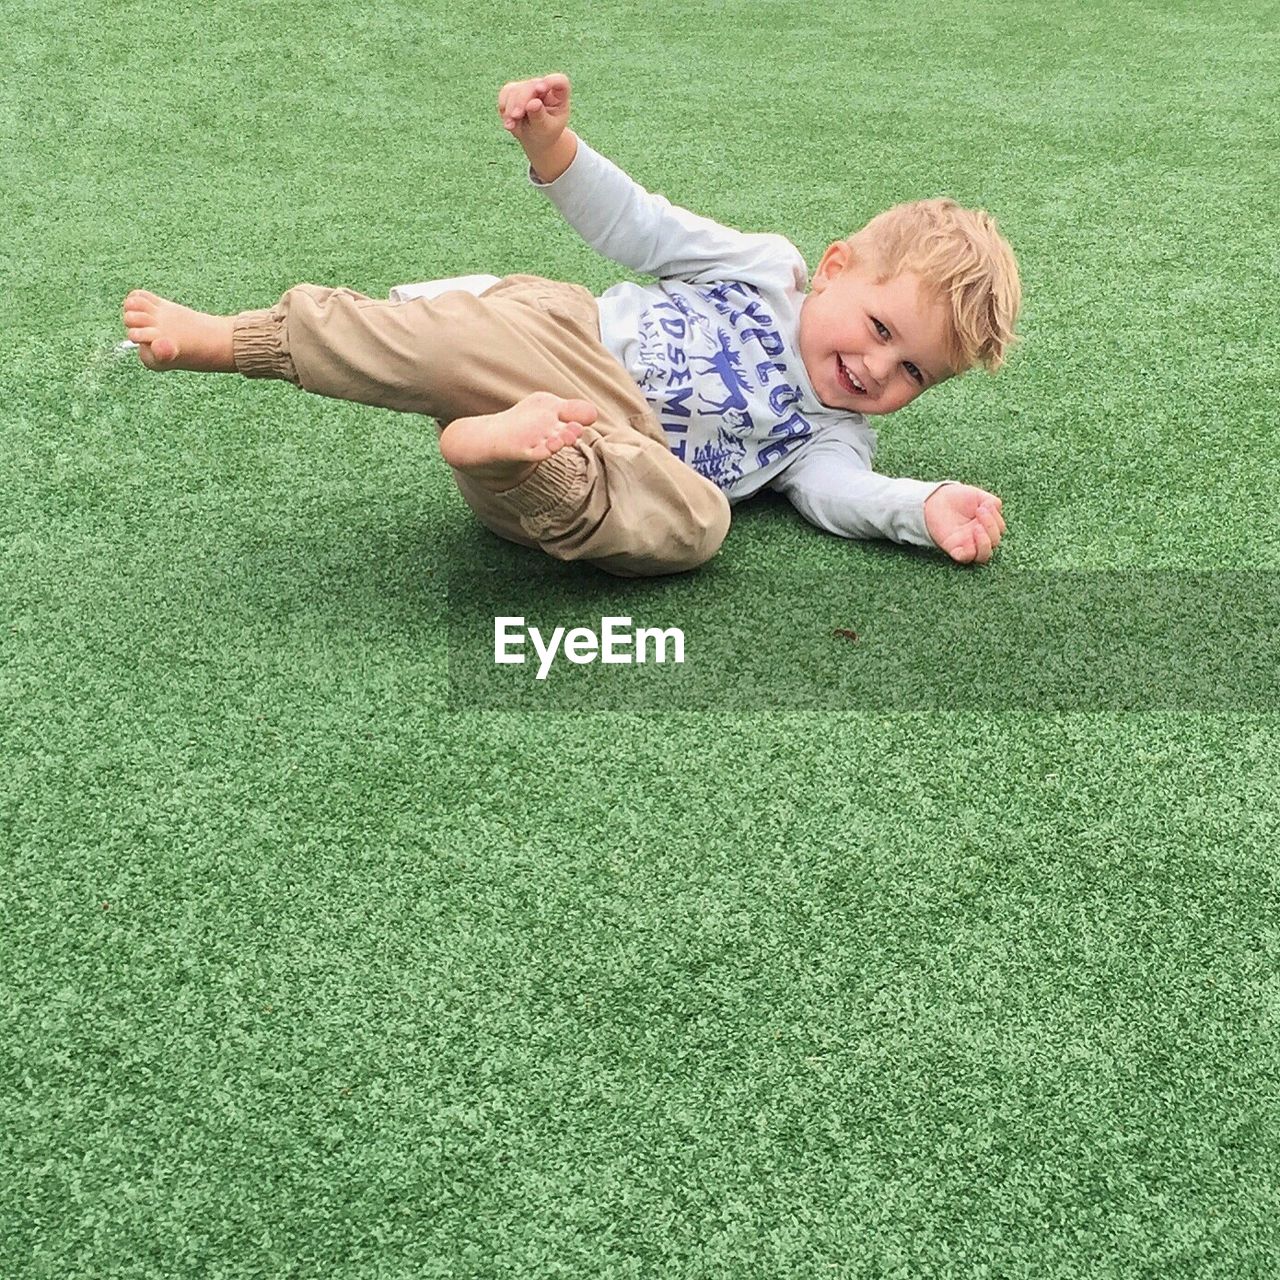 LITTLE BOY PLAYING IN GRASSY FIELD